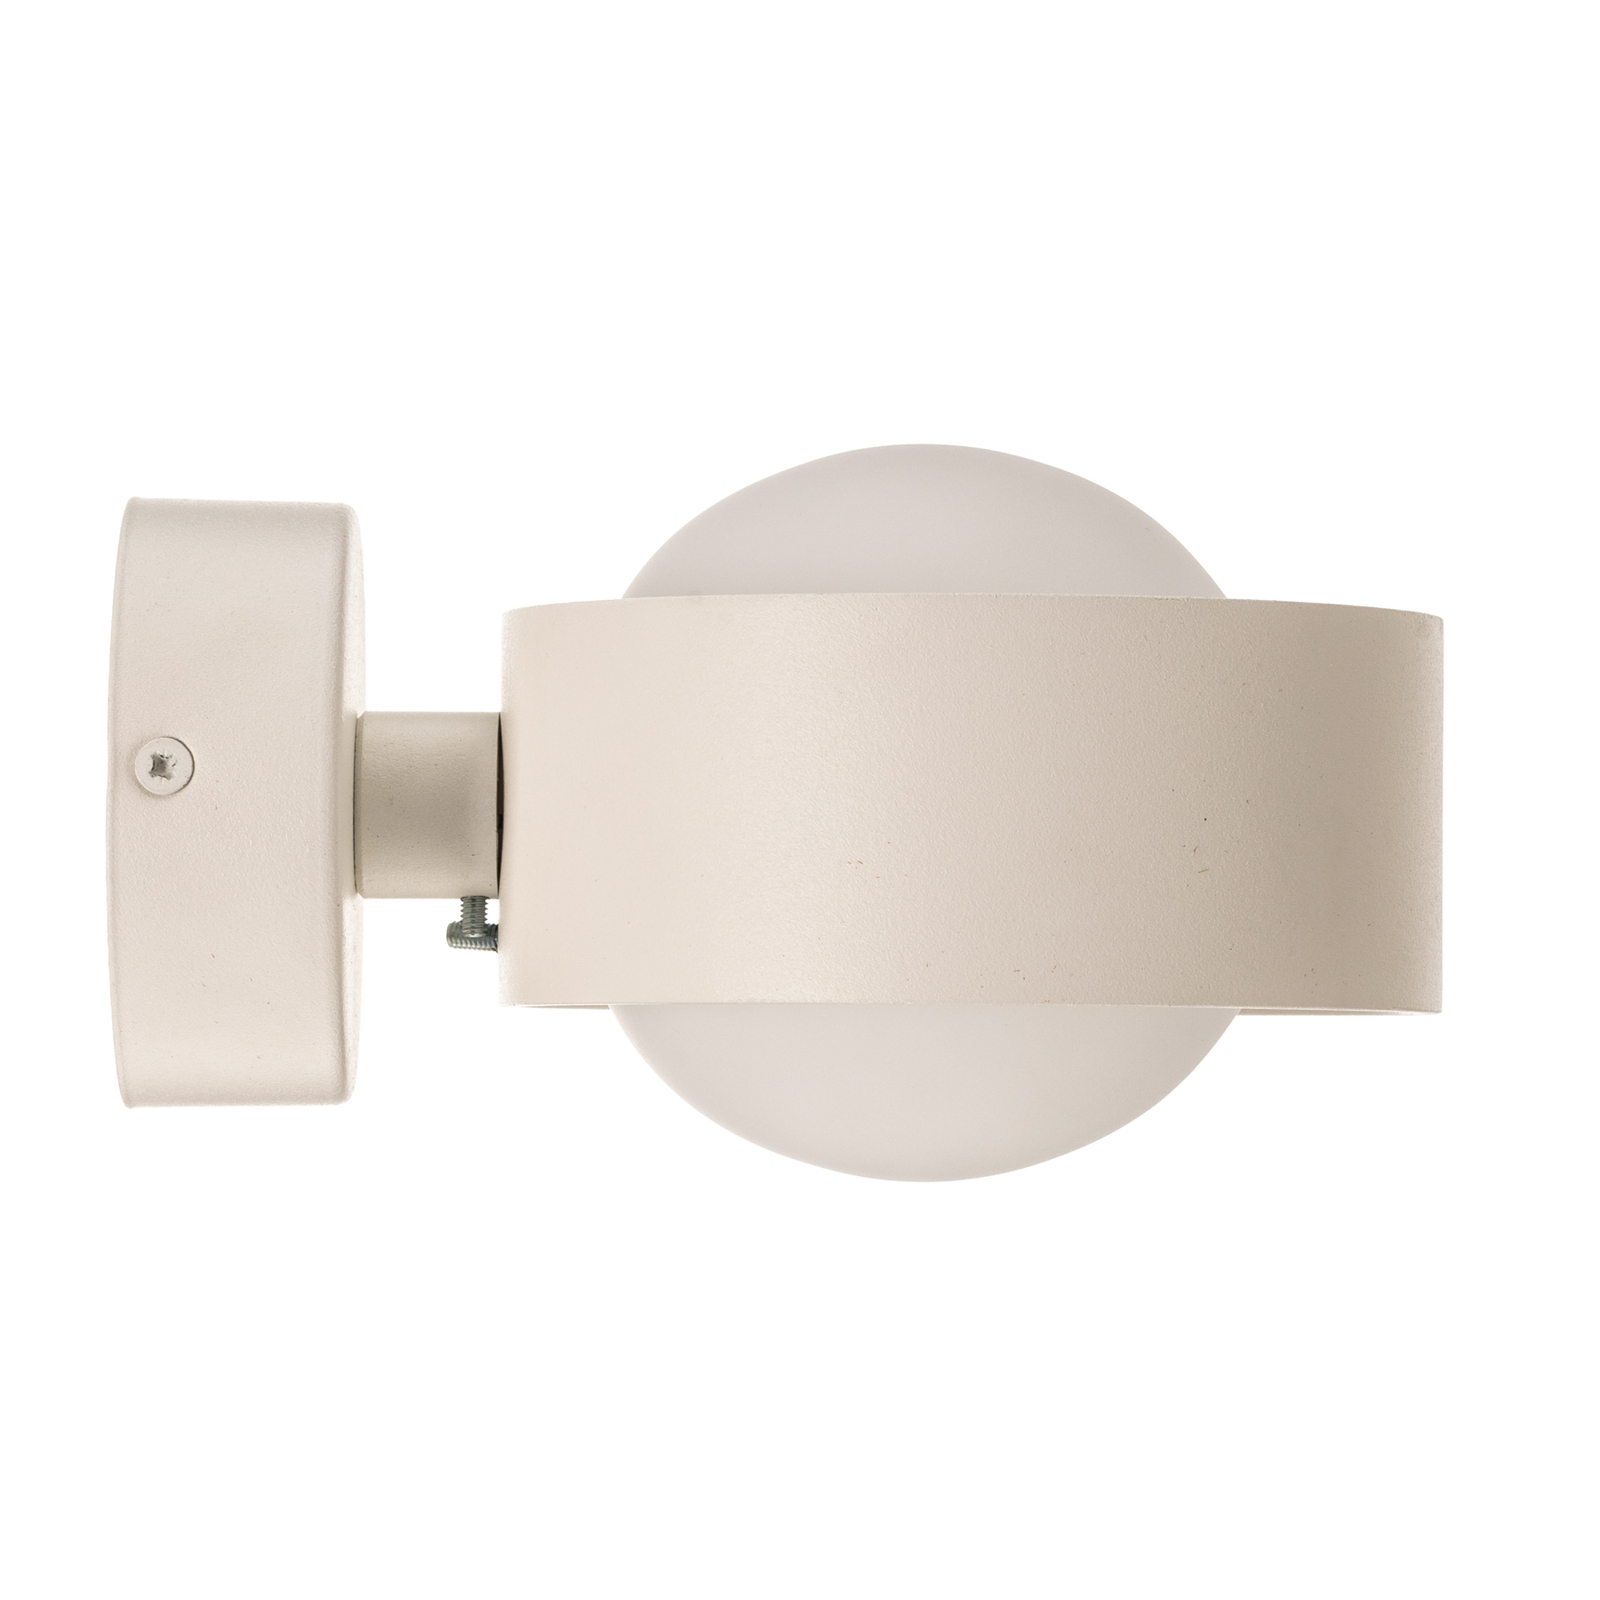 Mado wall light, steel, white, one-bulb